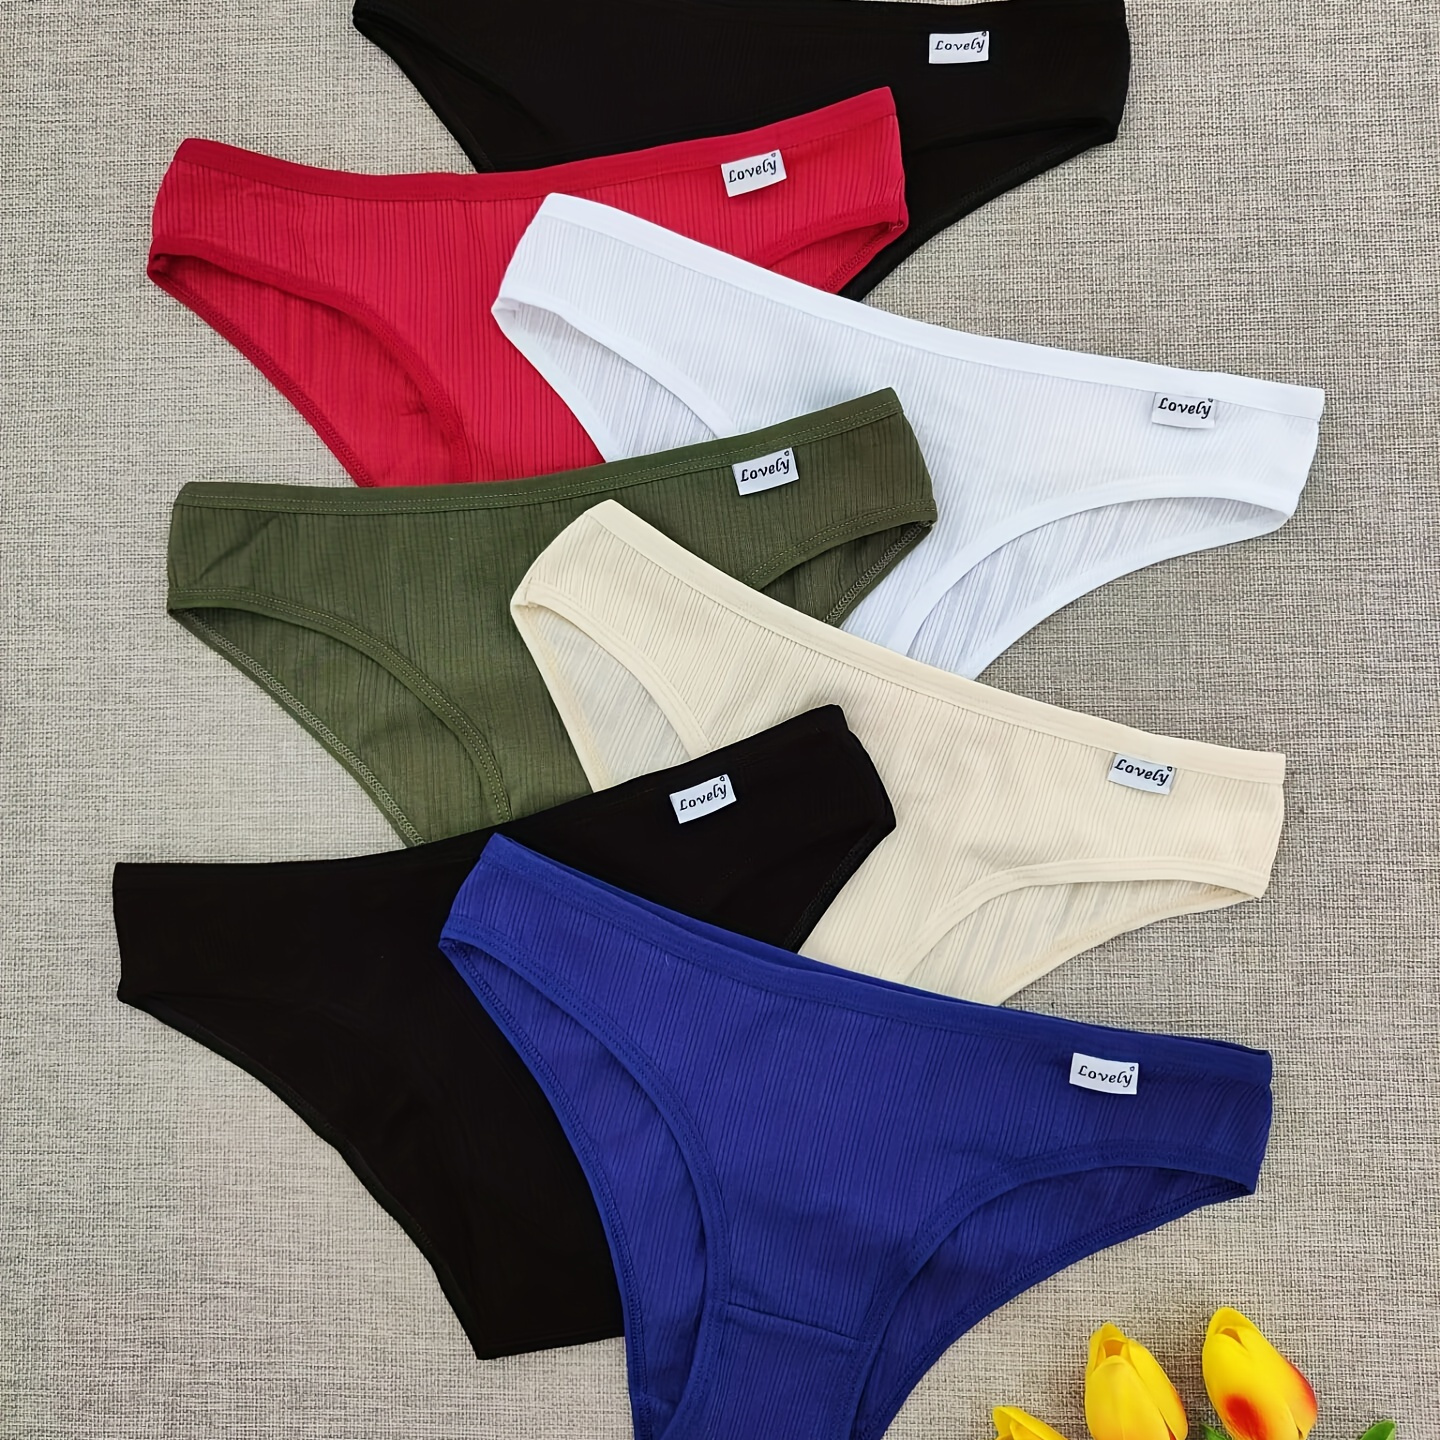 

7pcs Solid Ribbed Low Waist Briefs, Elegant & Comfy Cotton Intimate Panties, Women's Lingerie & Underwear